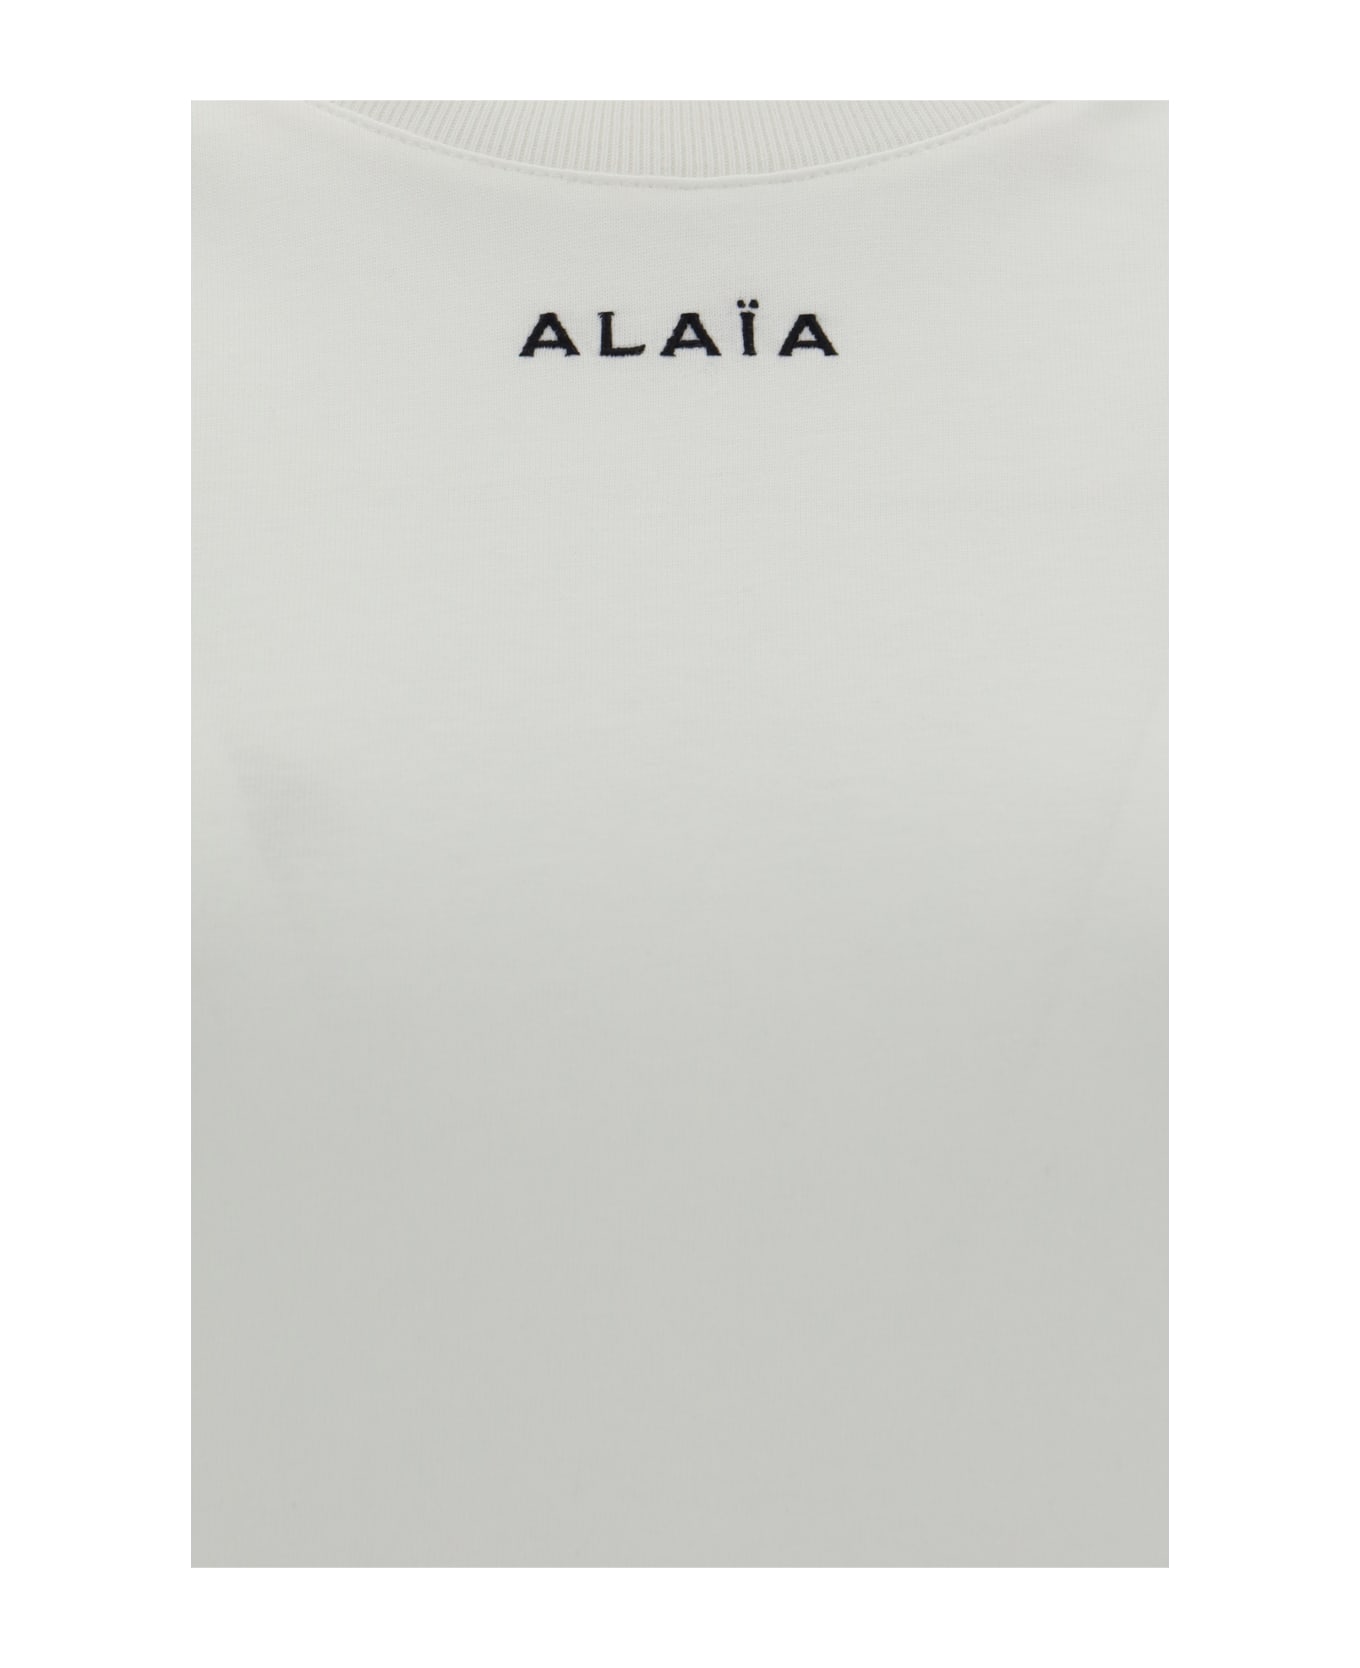 Alaia Fluid T-shirt Bodysuit - WHITE